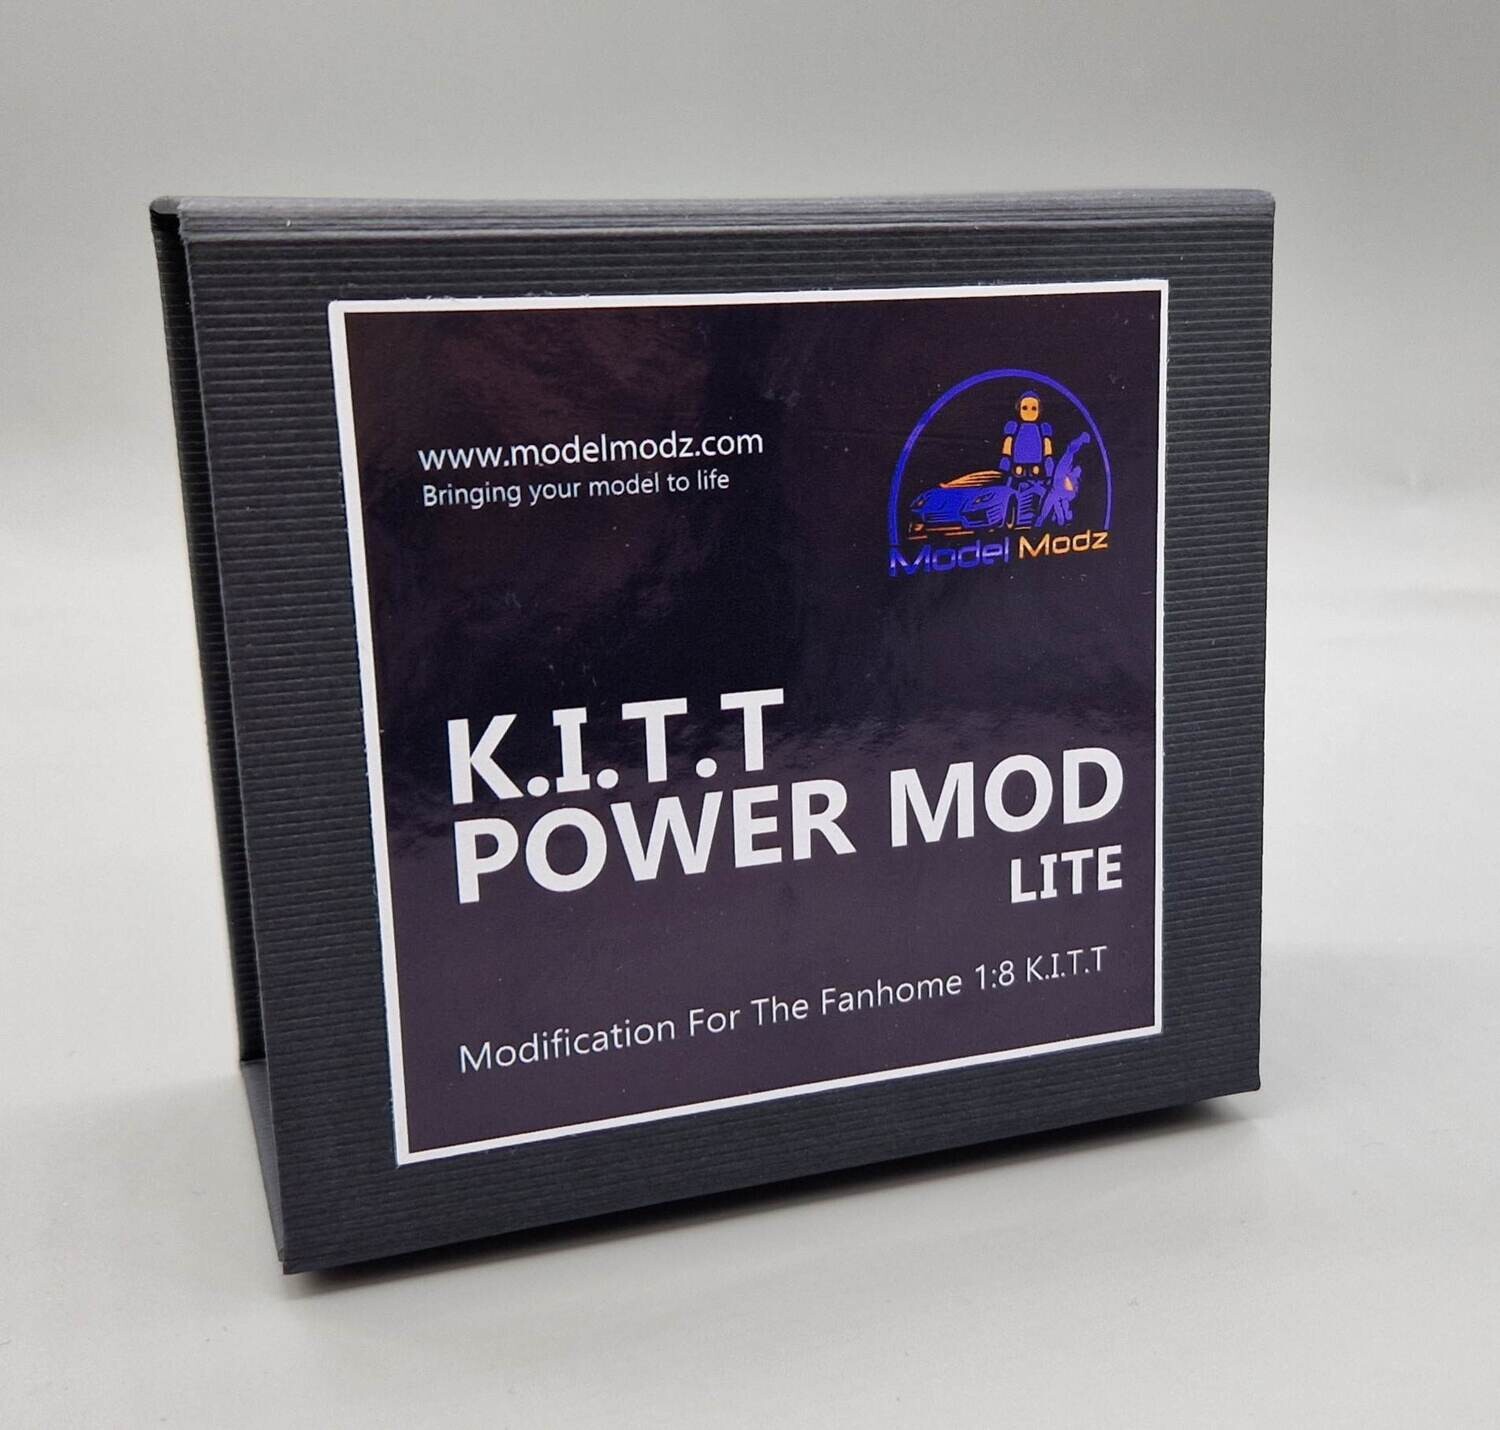 Knightrider K.I.T.T. 1/8 Scale Power mod
LITE